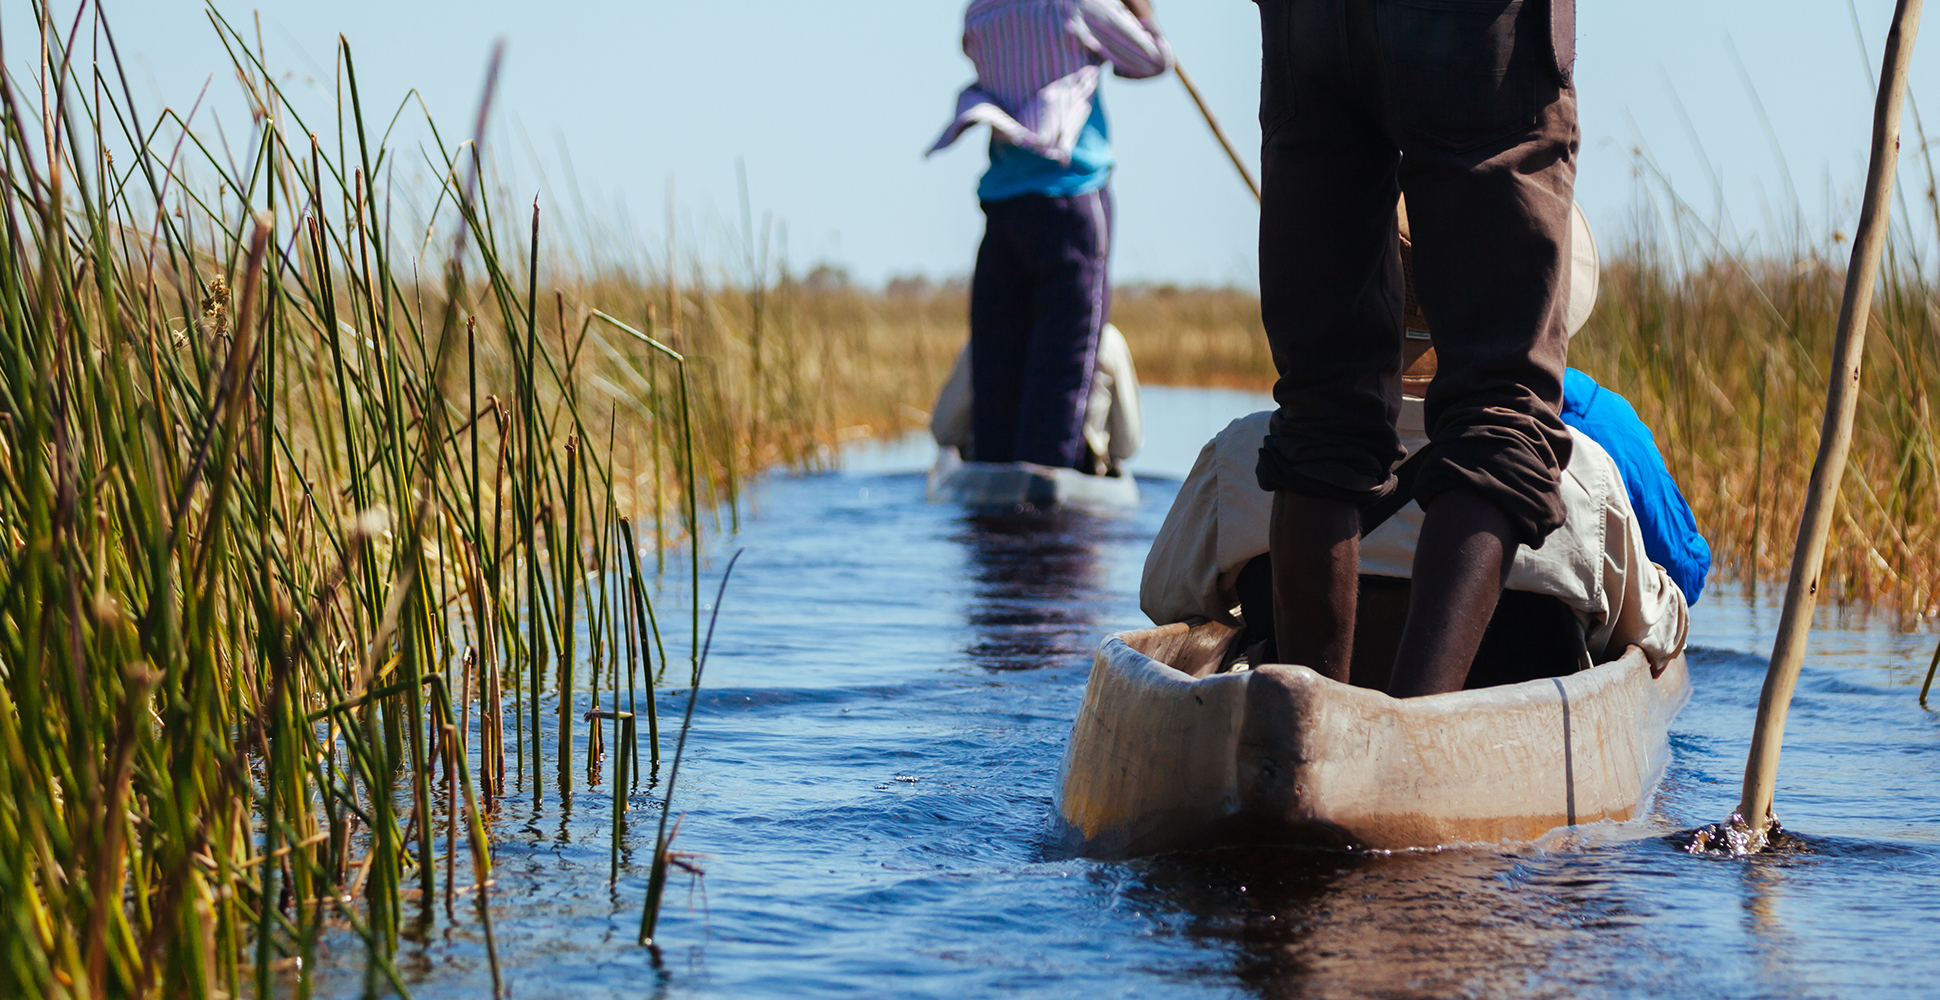 Mokoro boats allow for transportation on the Okavango Delta, Botswana